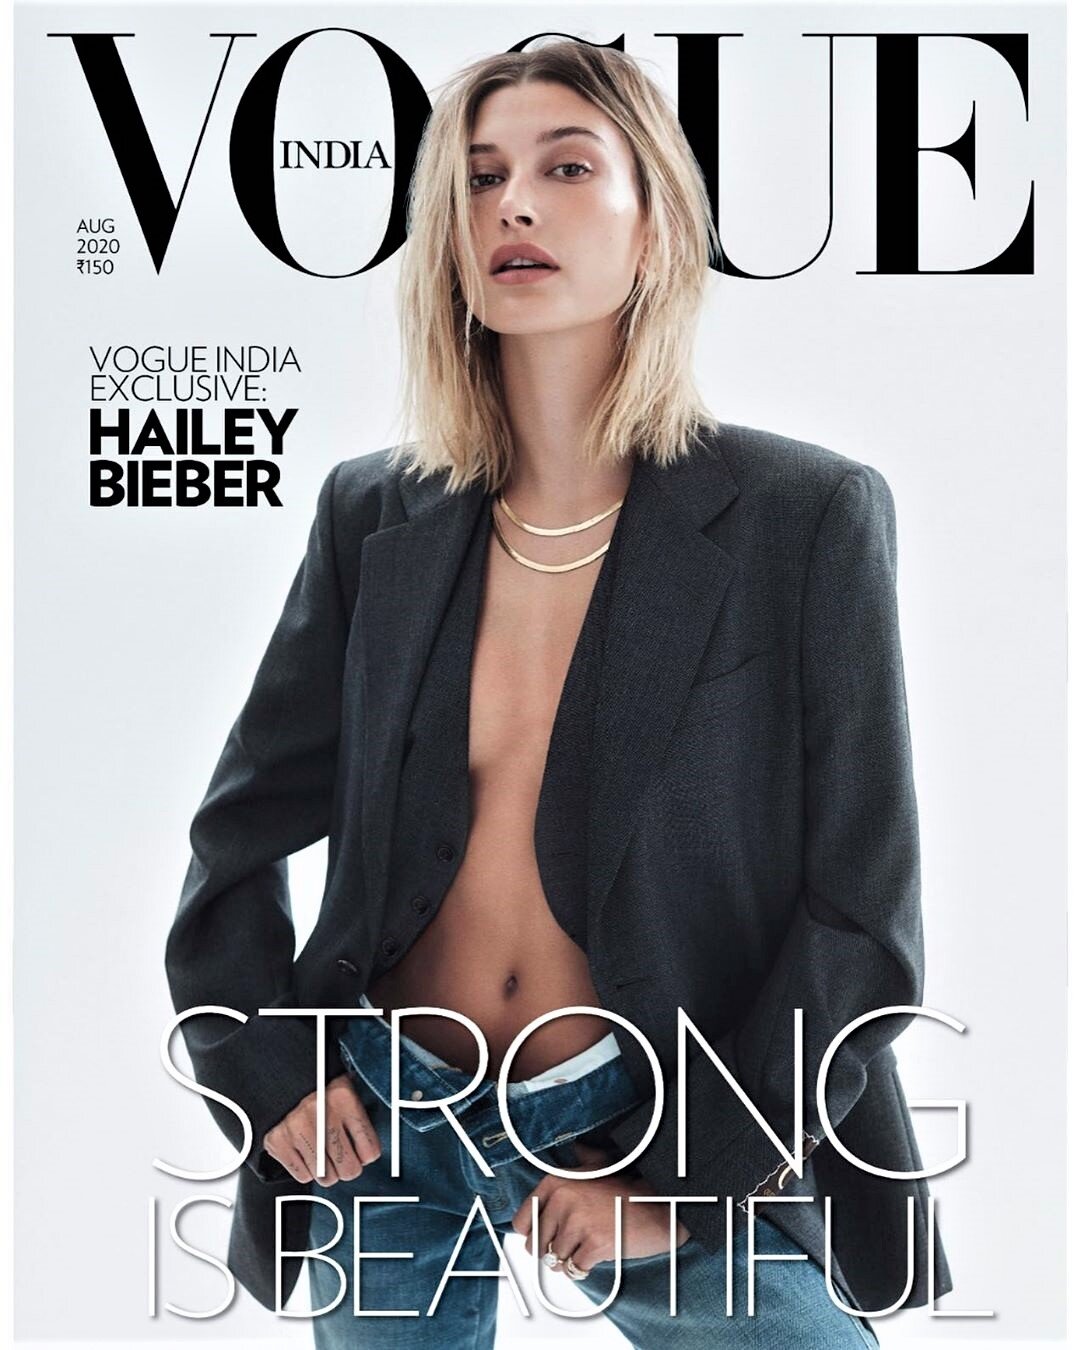 Hailey Bieber Vogue India Sept 2020 (1).jpg